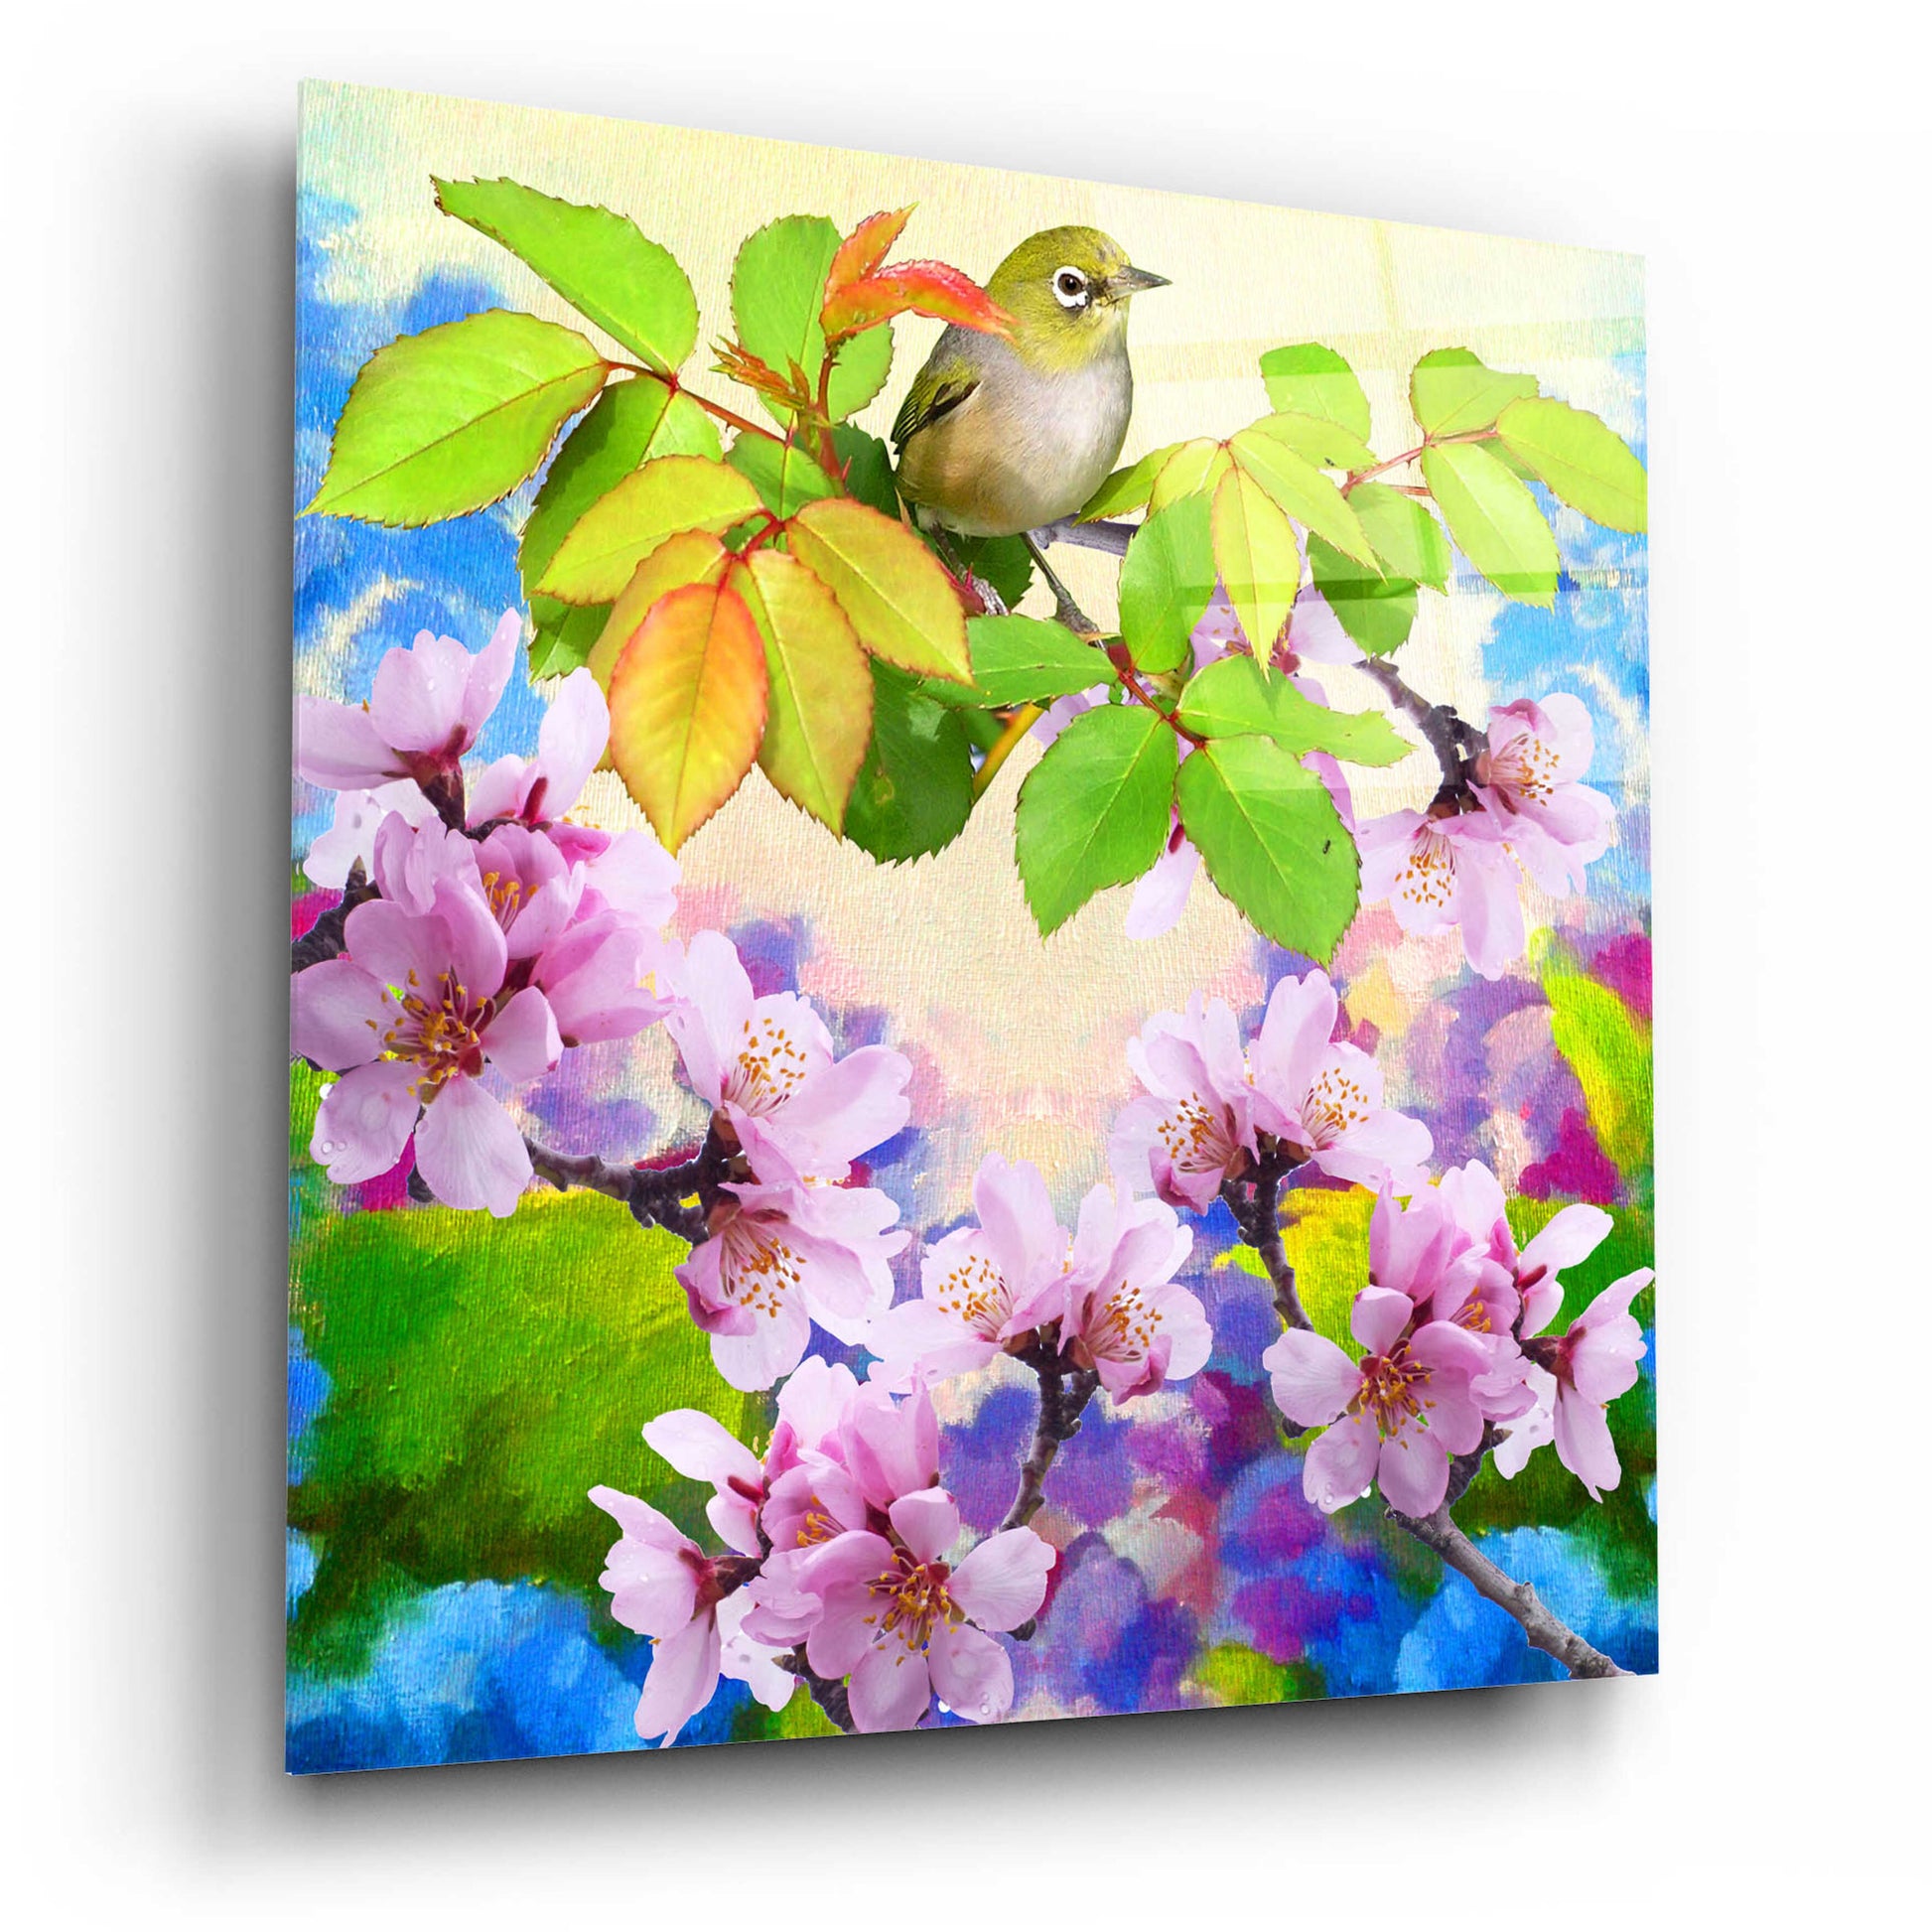 Epic Art 'Spring Colors 2' by Ata Alishahi, Acrylic Glass Wall Art,12x12